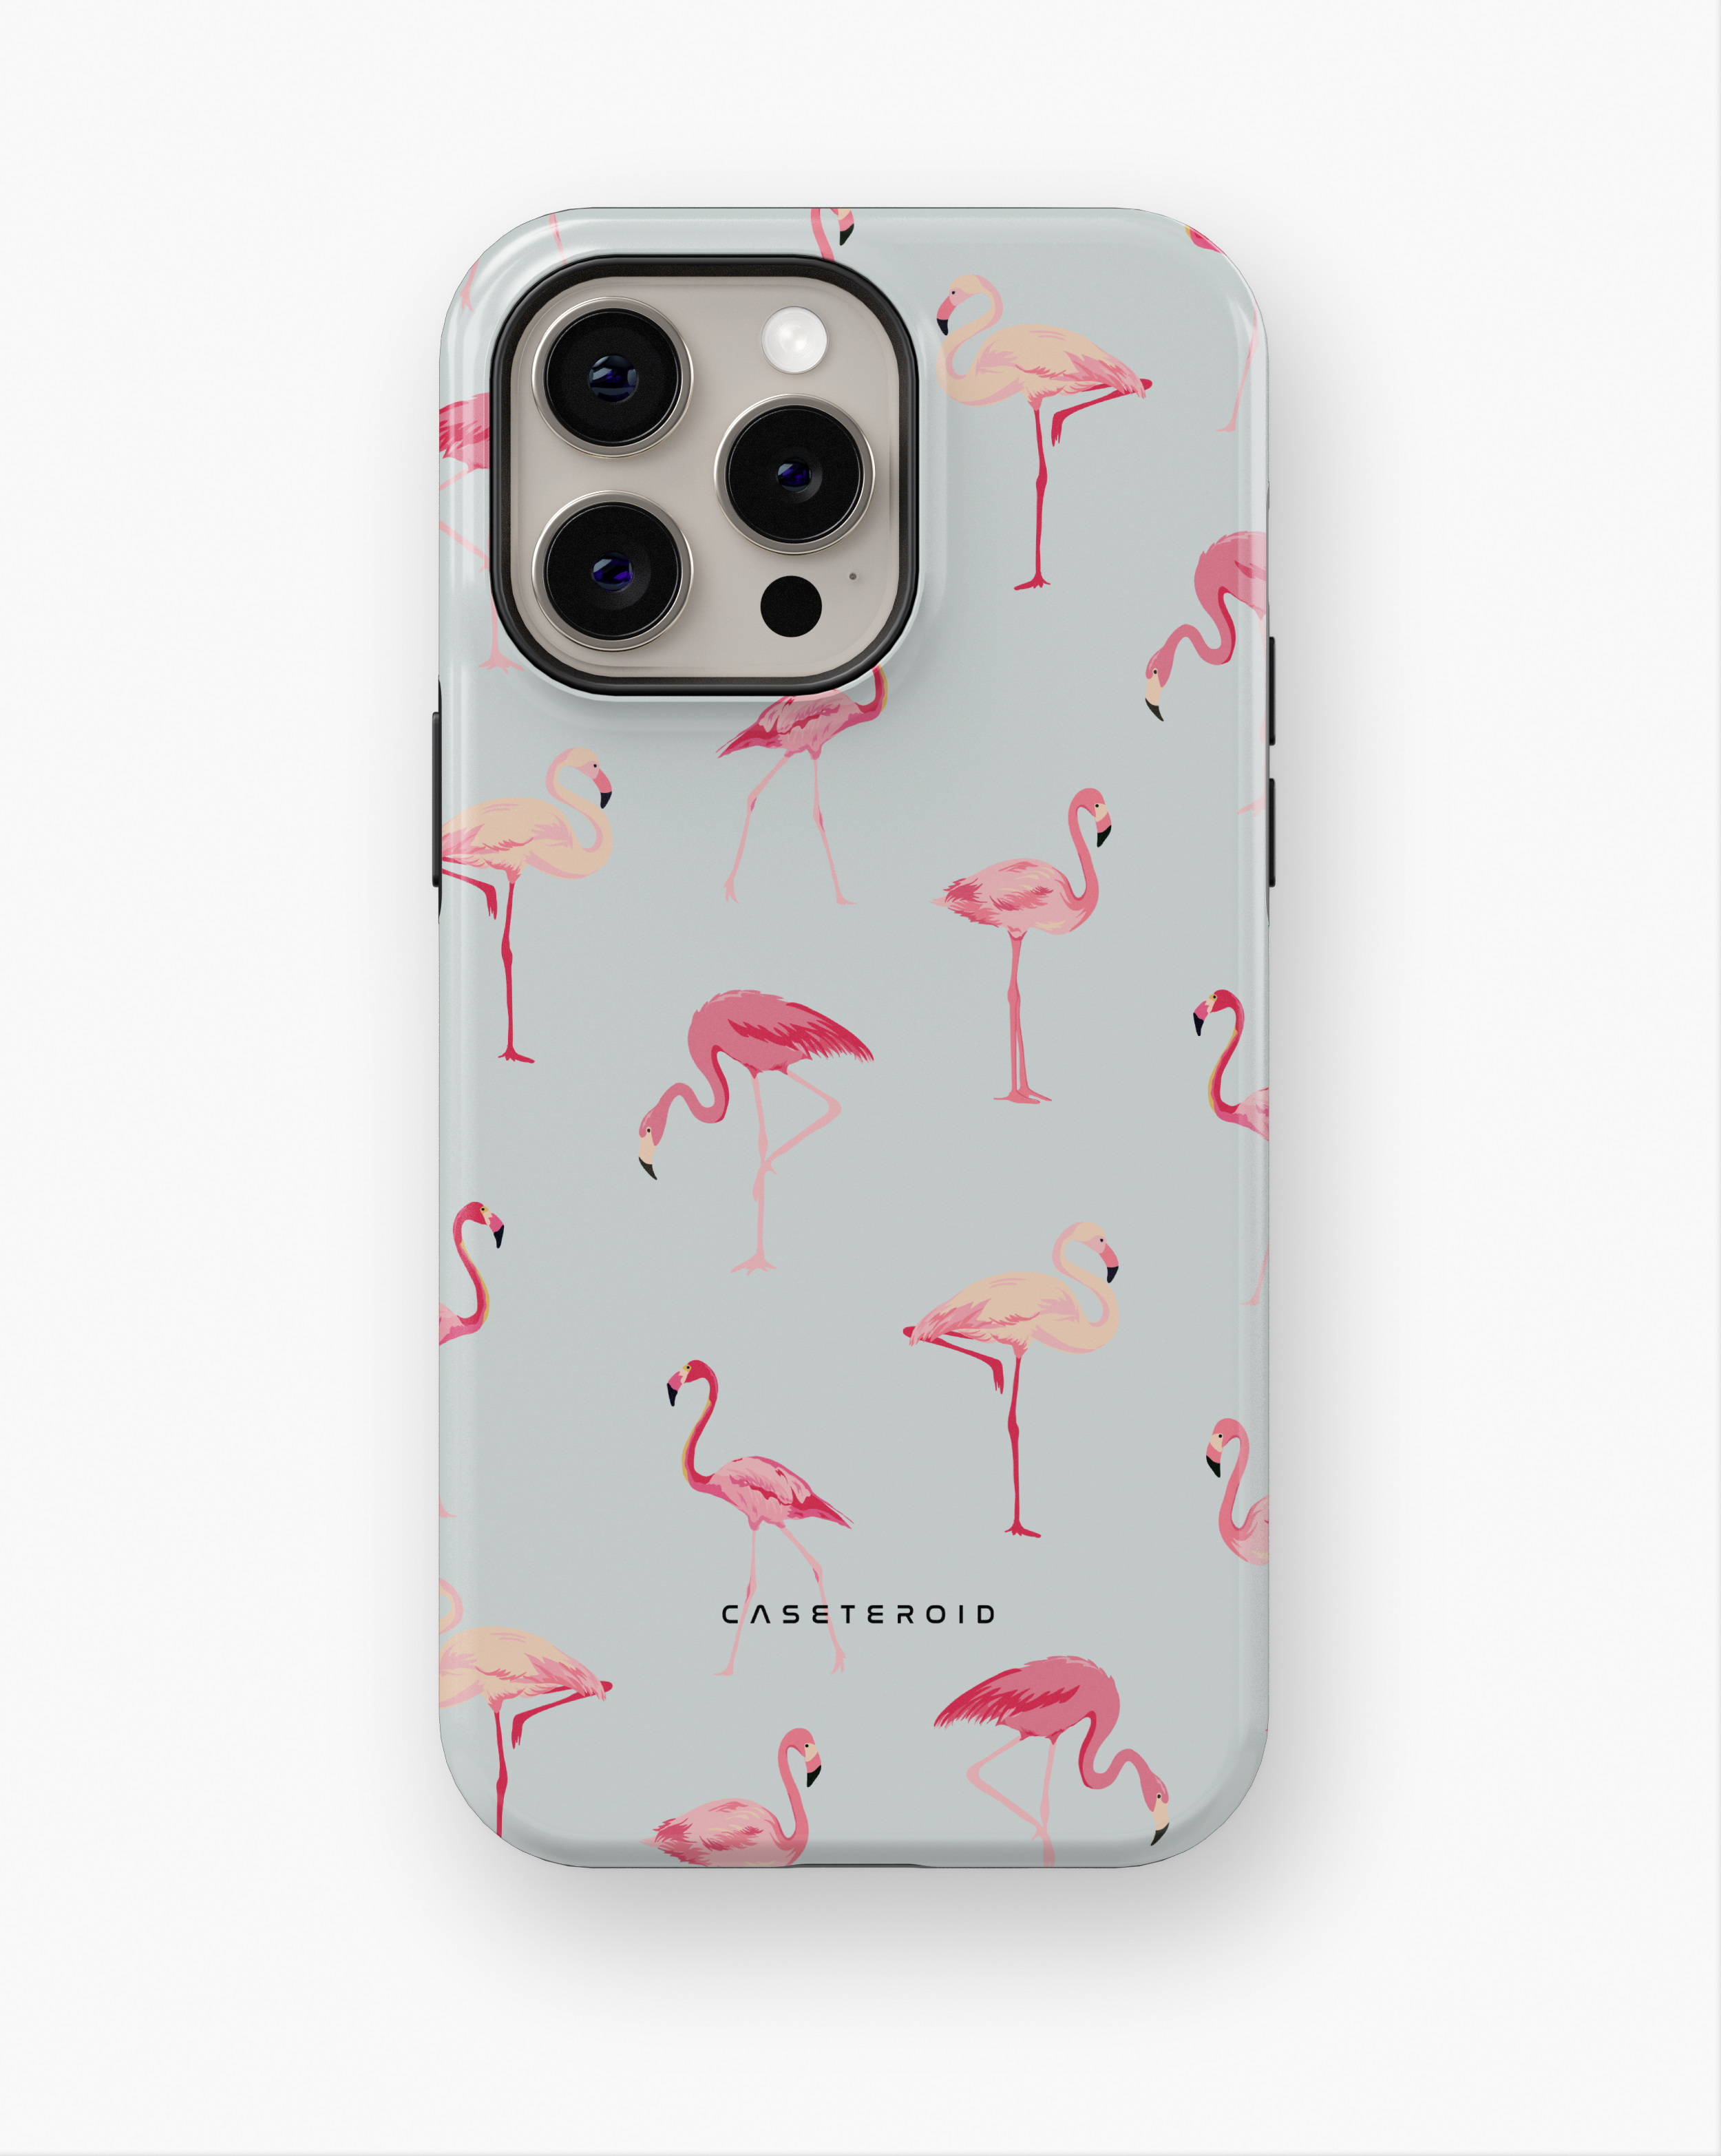 iPhone Tough Case with MagSafe - Flamingo - CASETEROID